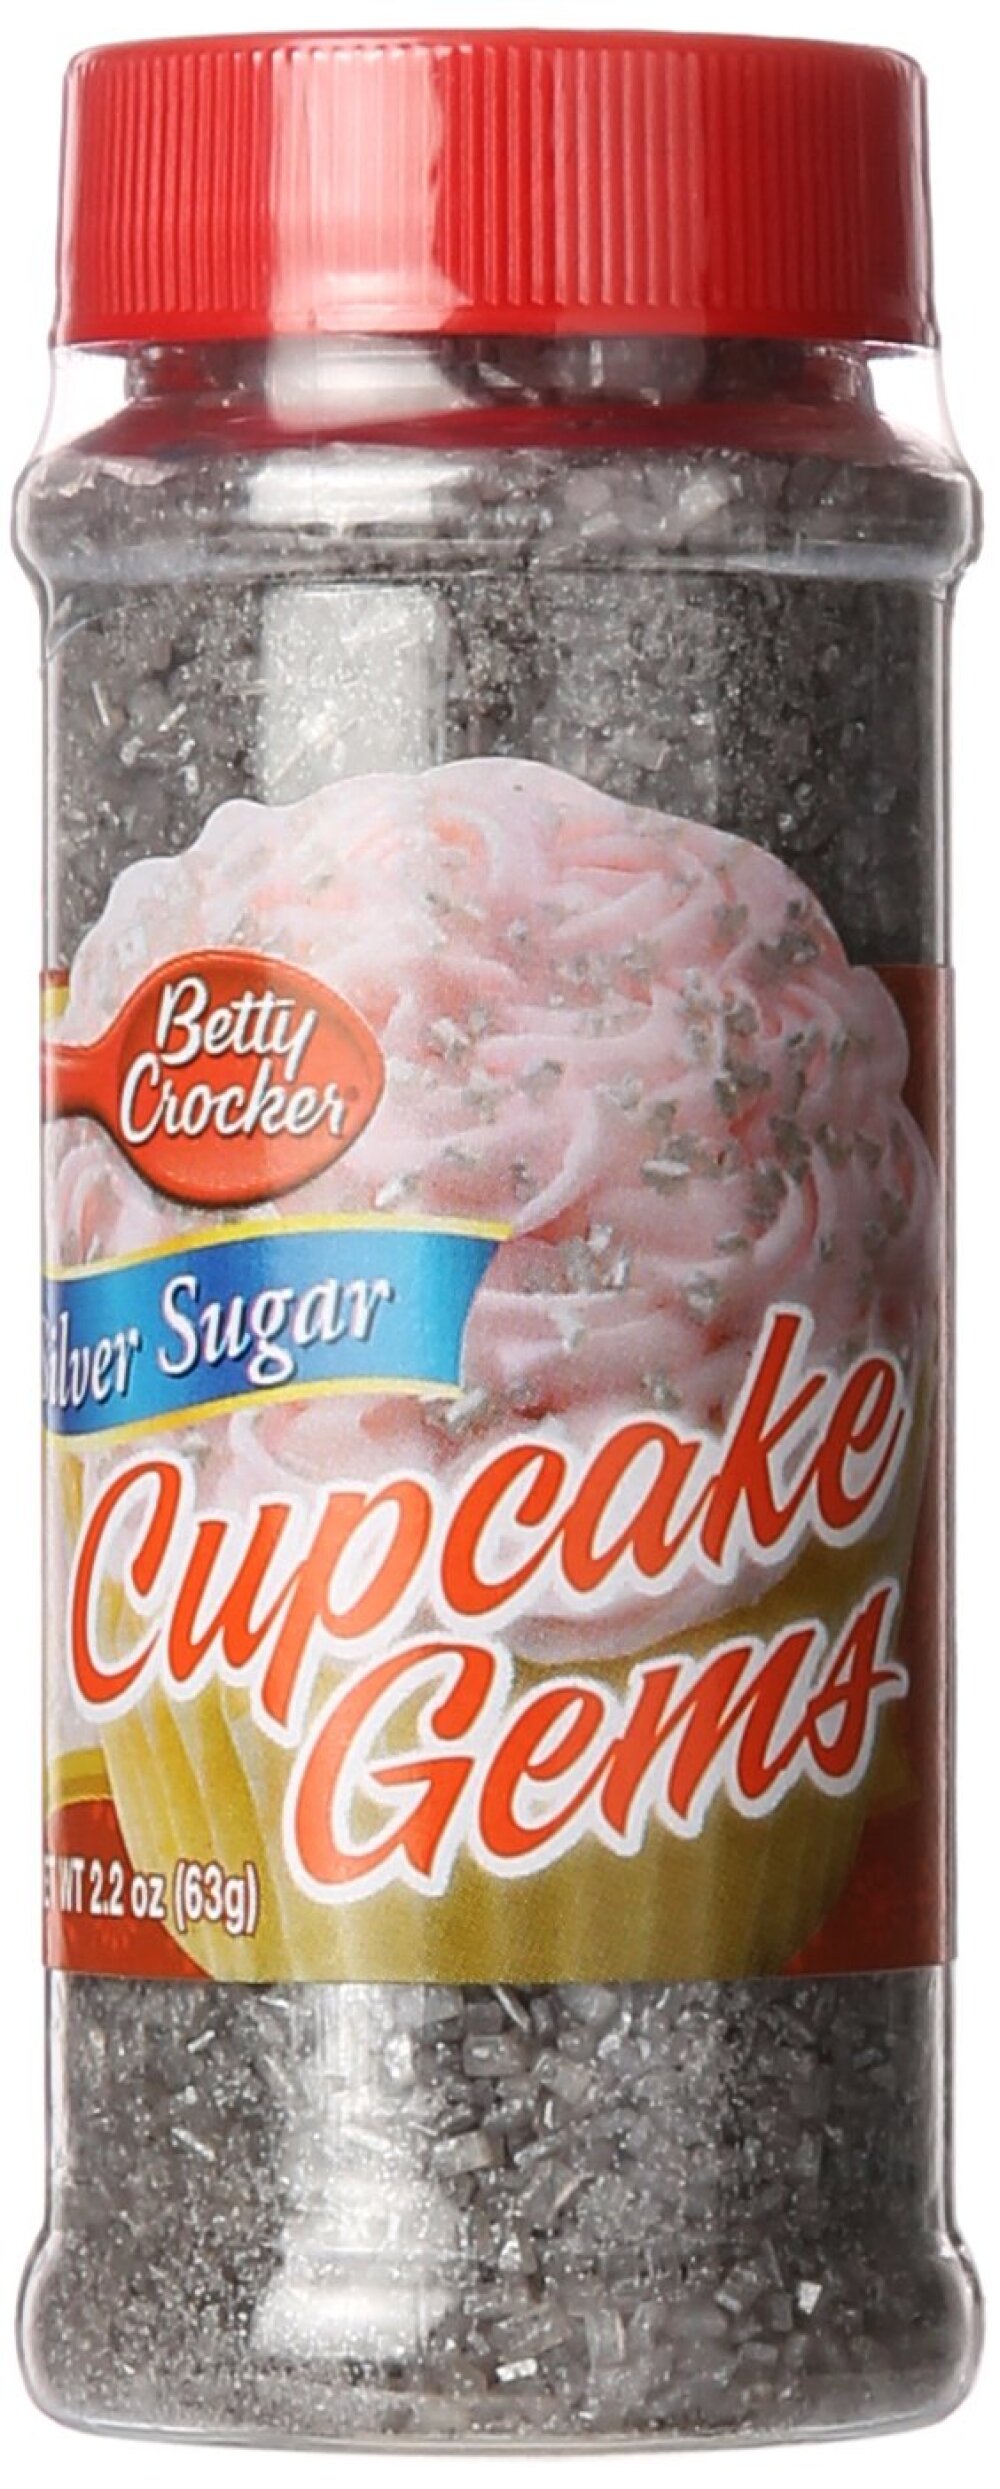 Betty Crocker Cupcake Gems 2oz-Silver Sugar - image 1 of 3